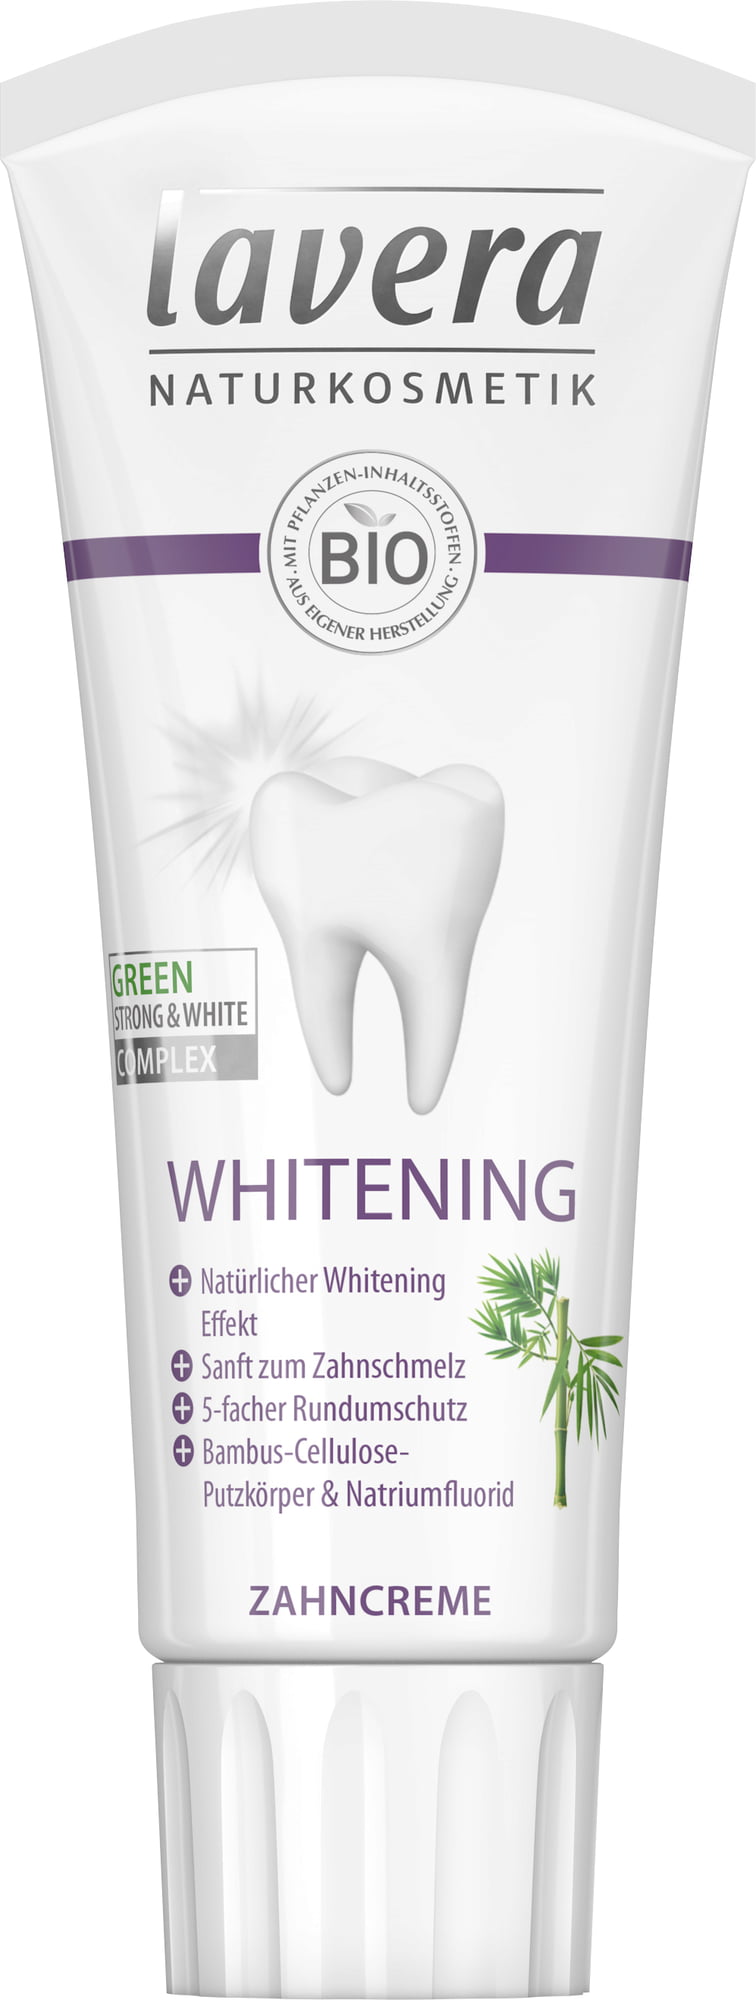 Lavera toothpaste whitening, 75ml - firstorganicbaby